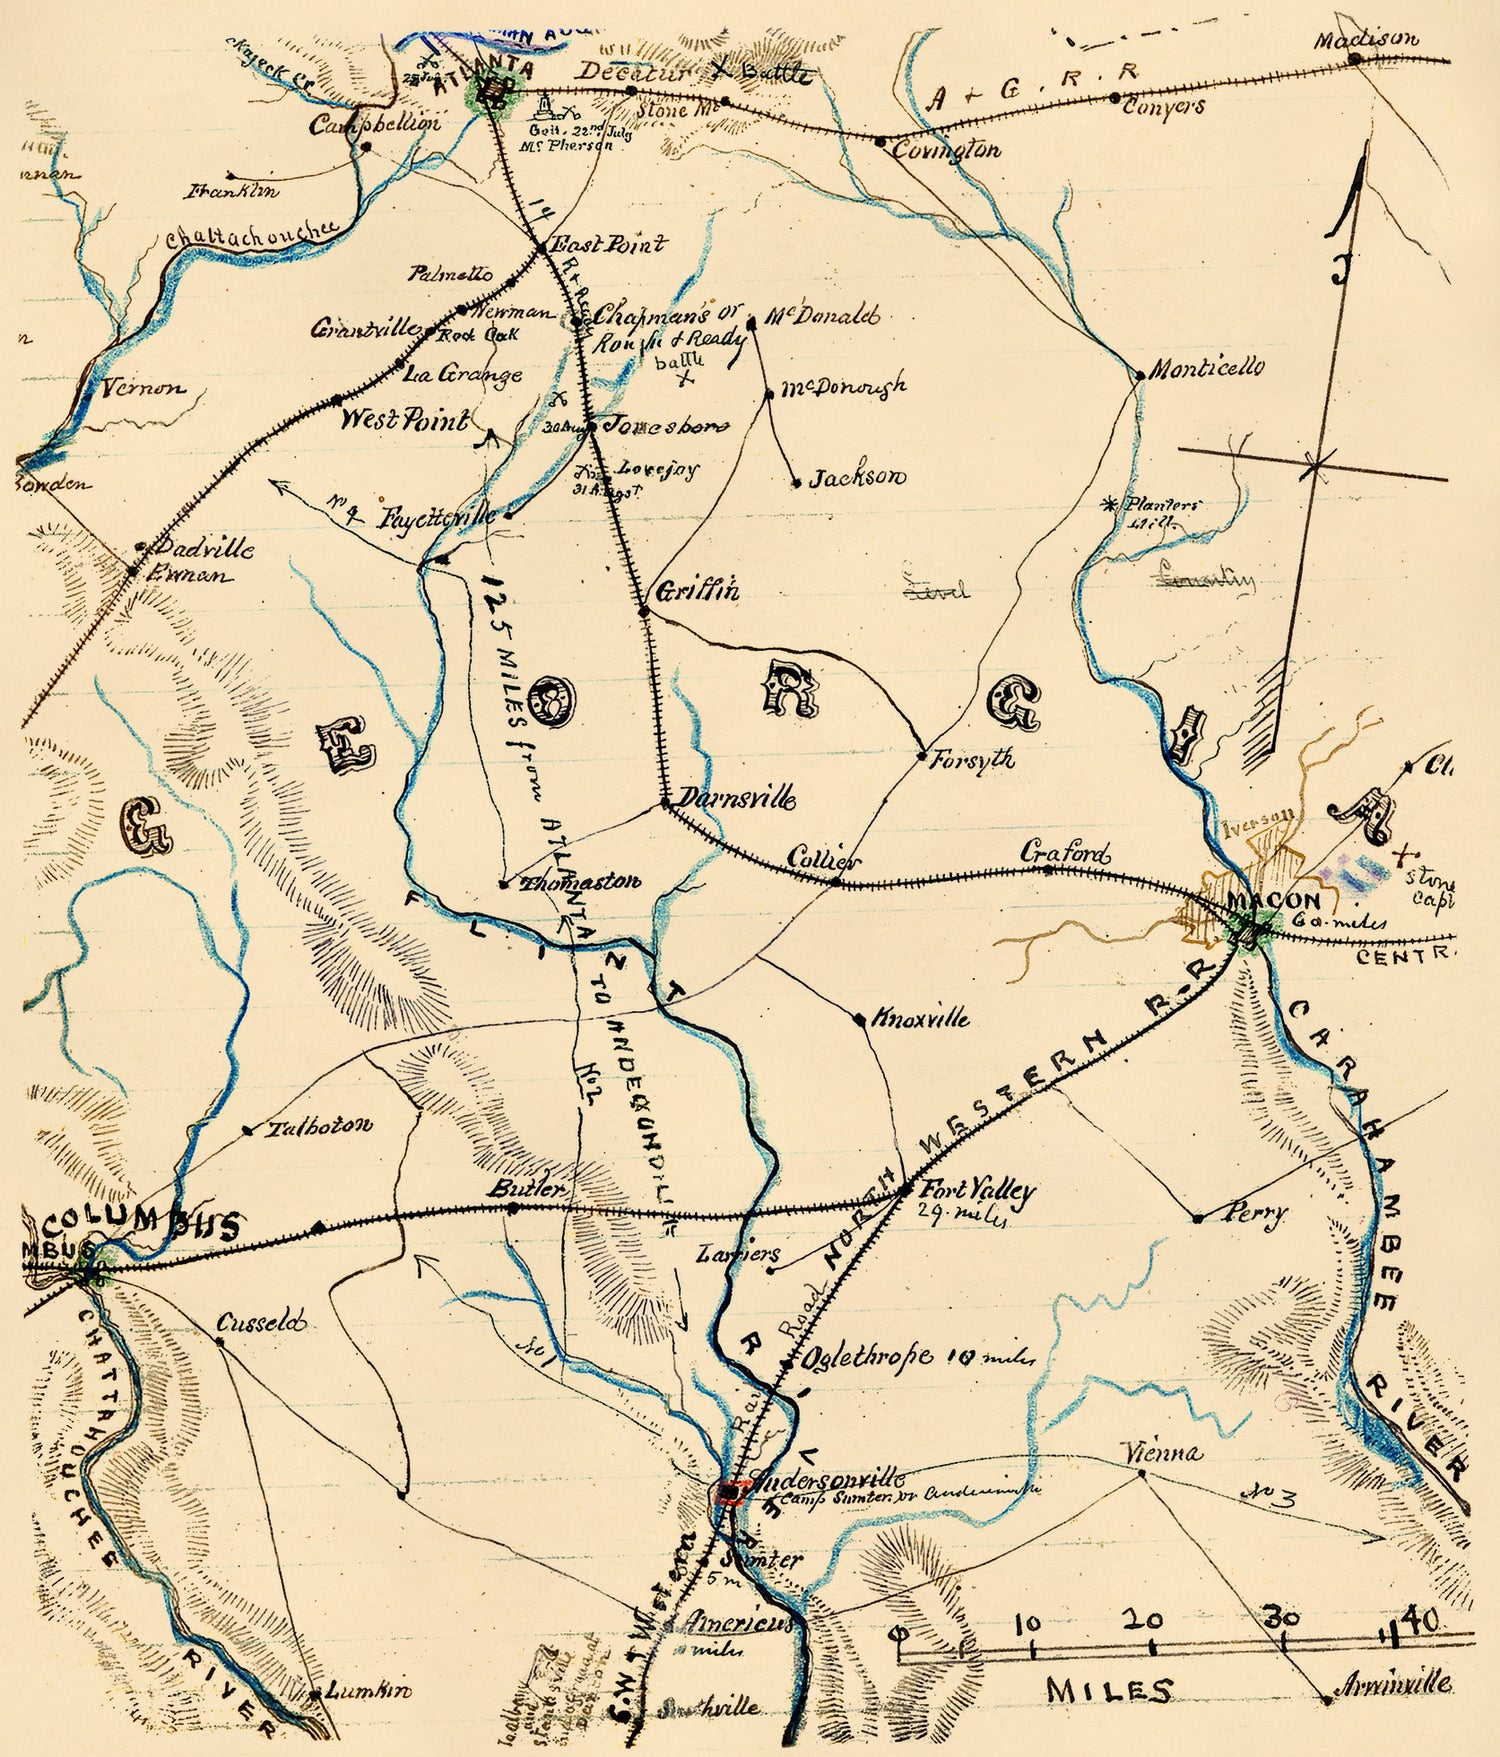 Georgia 1861